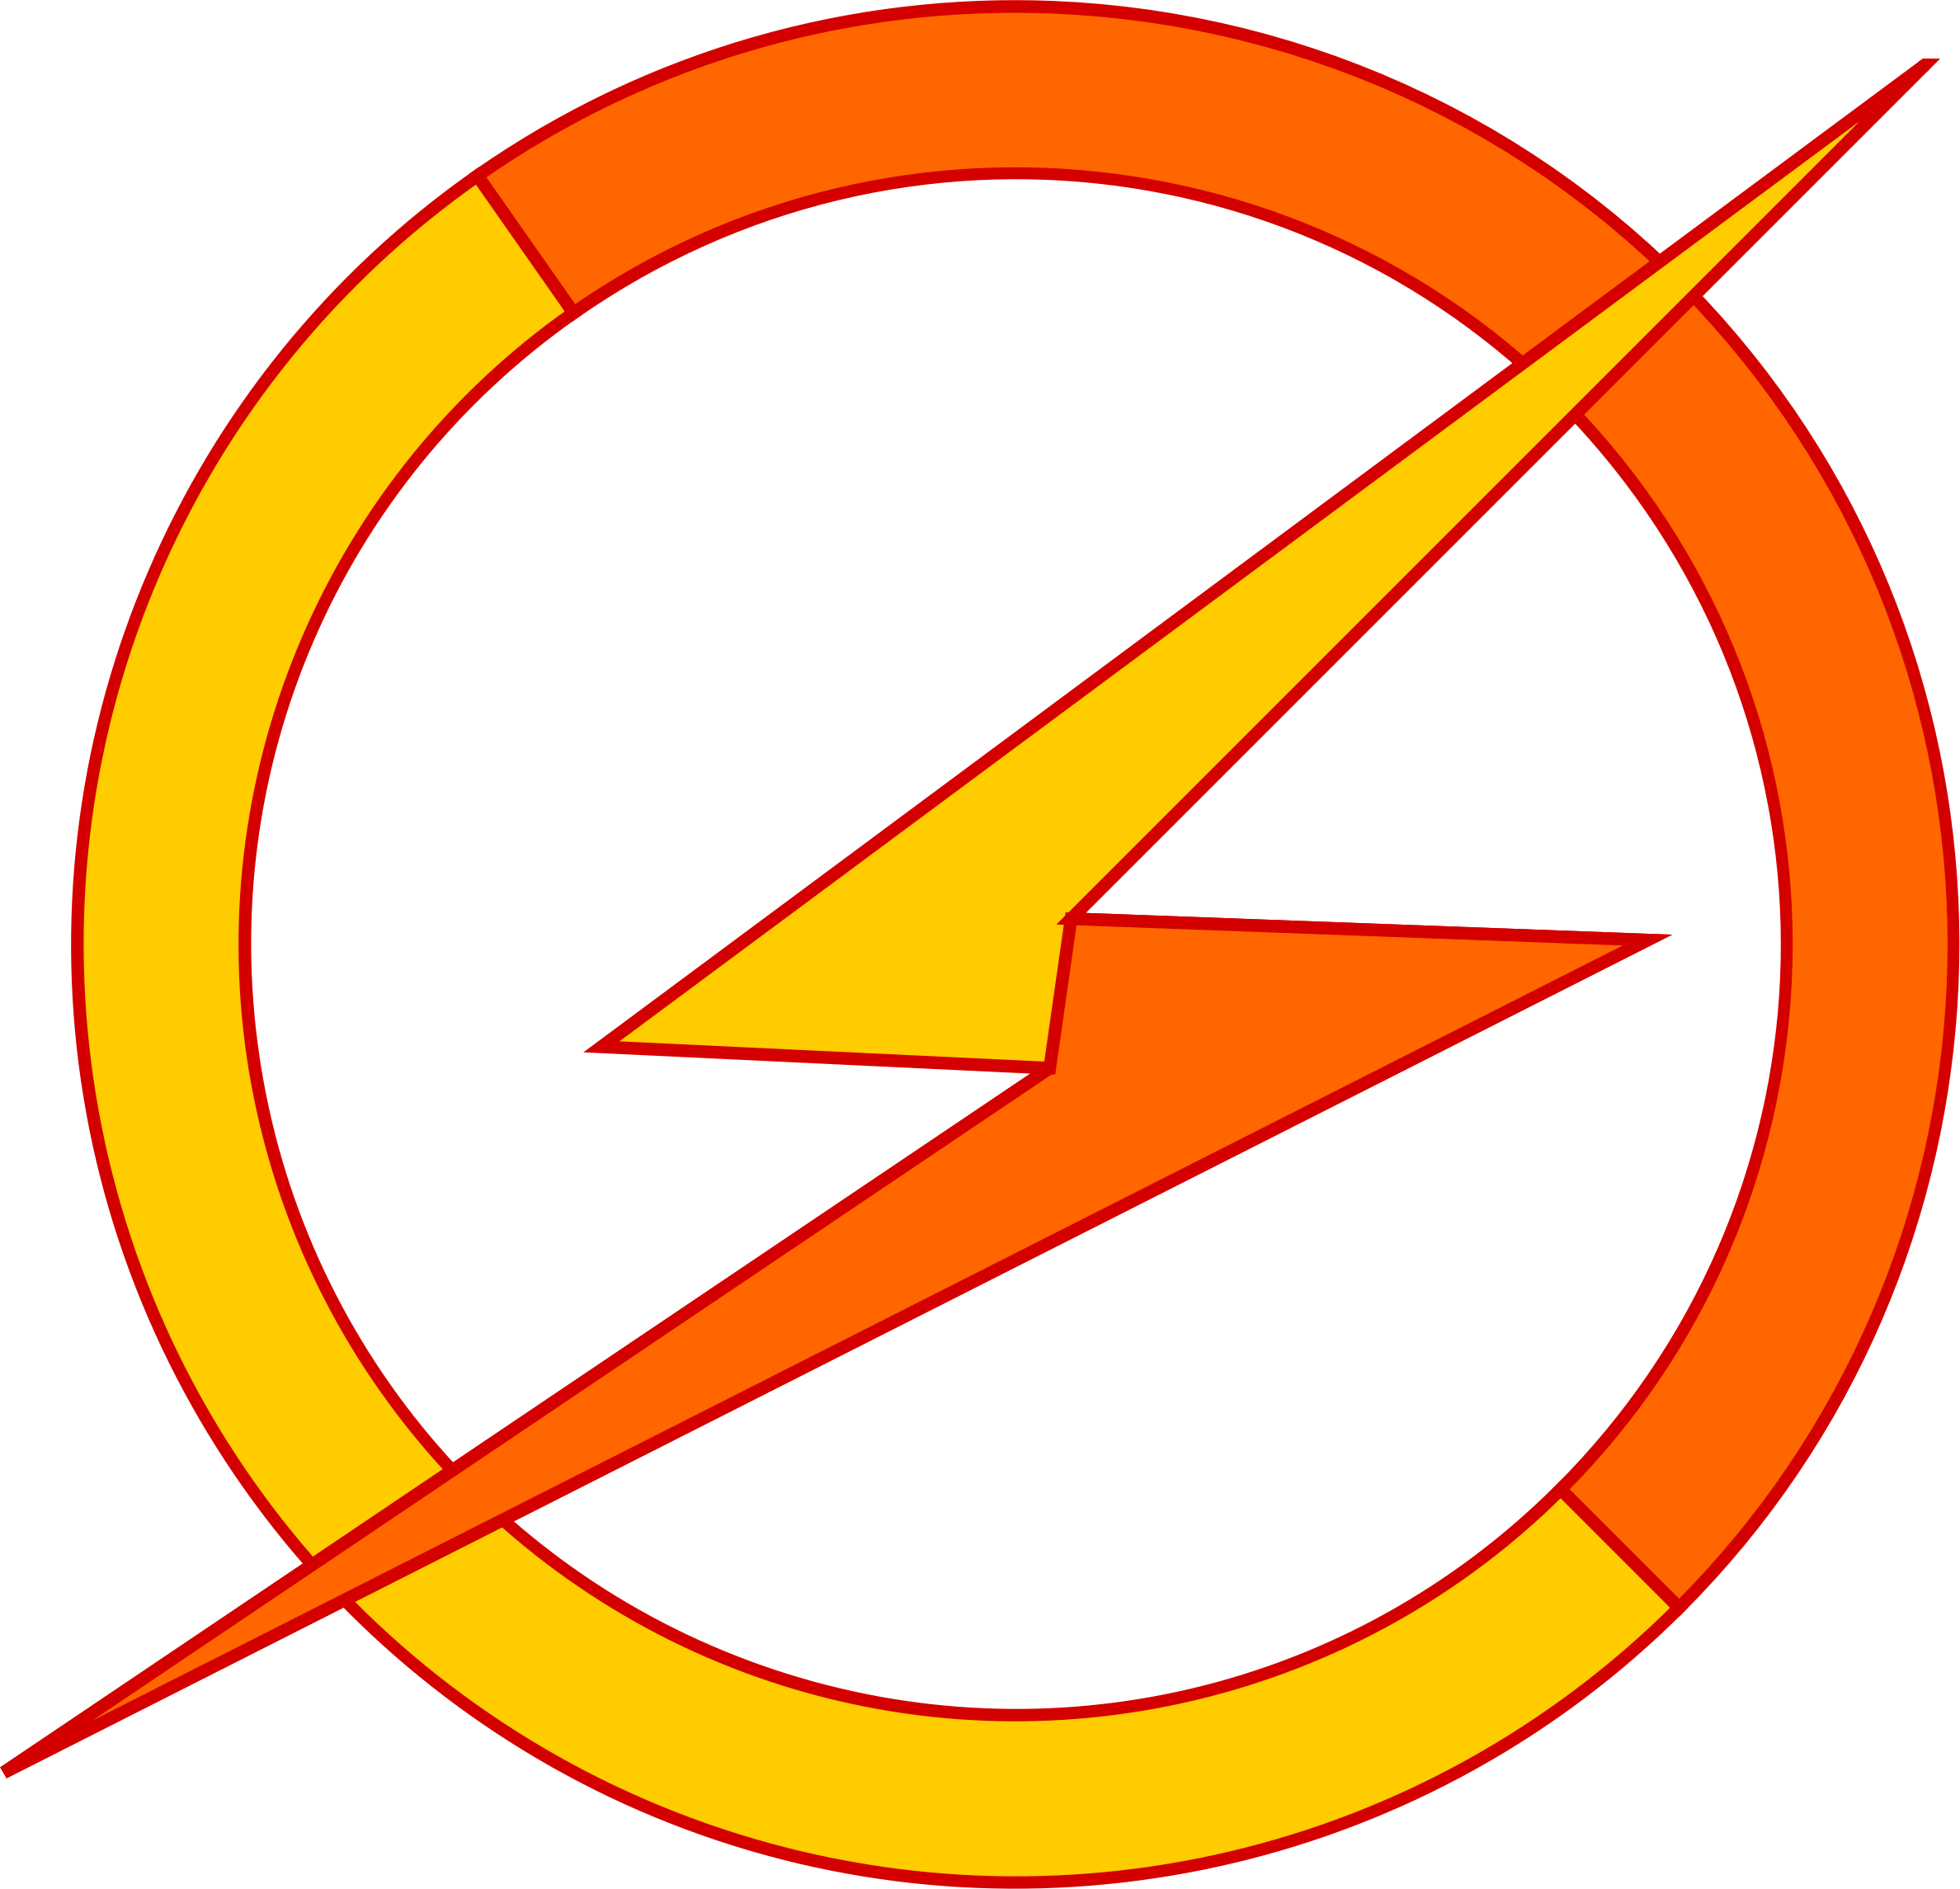 Lightning Bolt - Lighting Bolt With Circle (2376x2290)